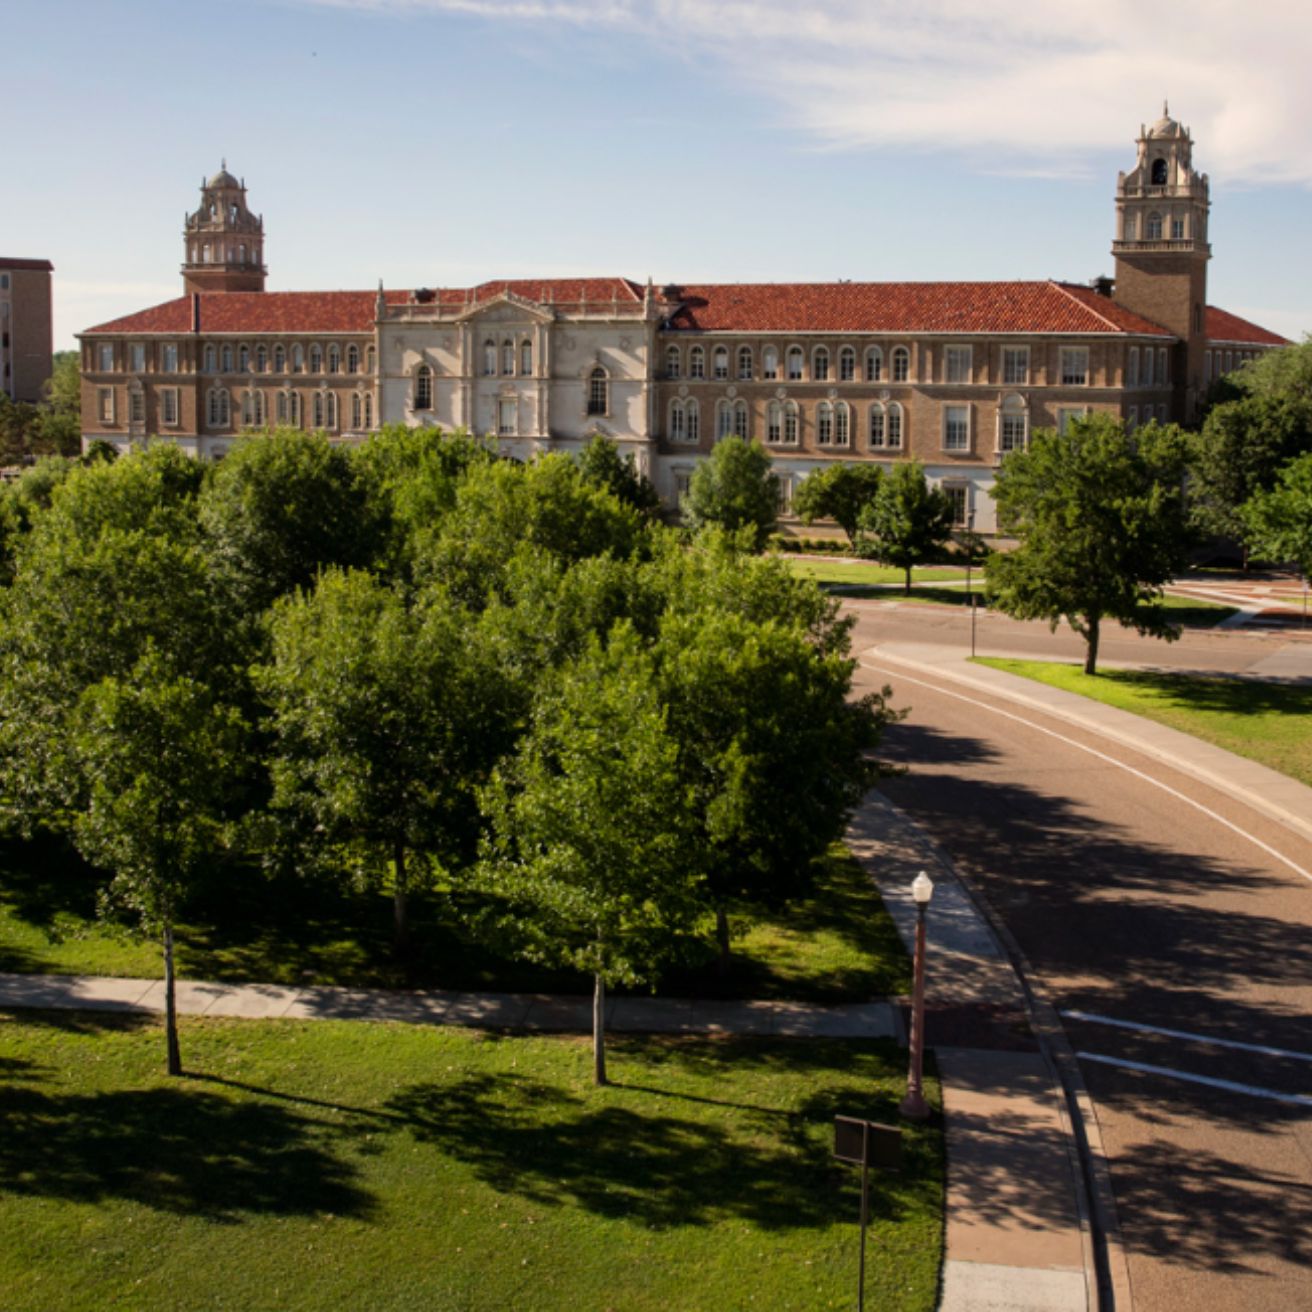 Texas Tech University campus